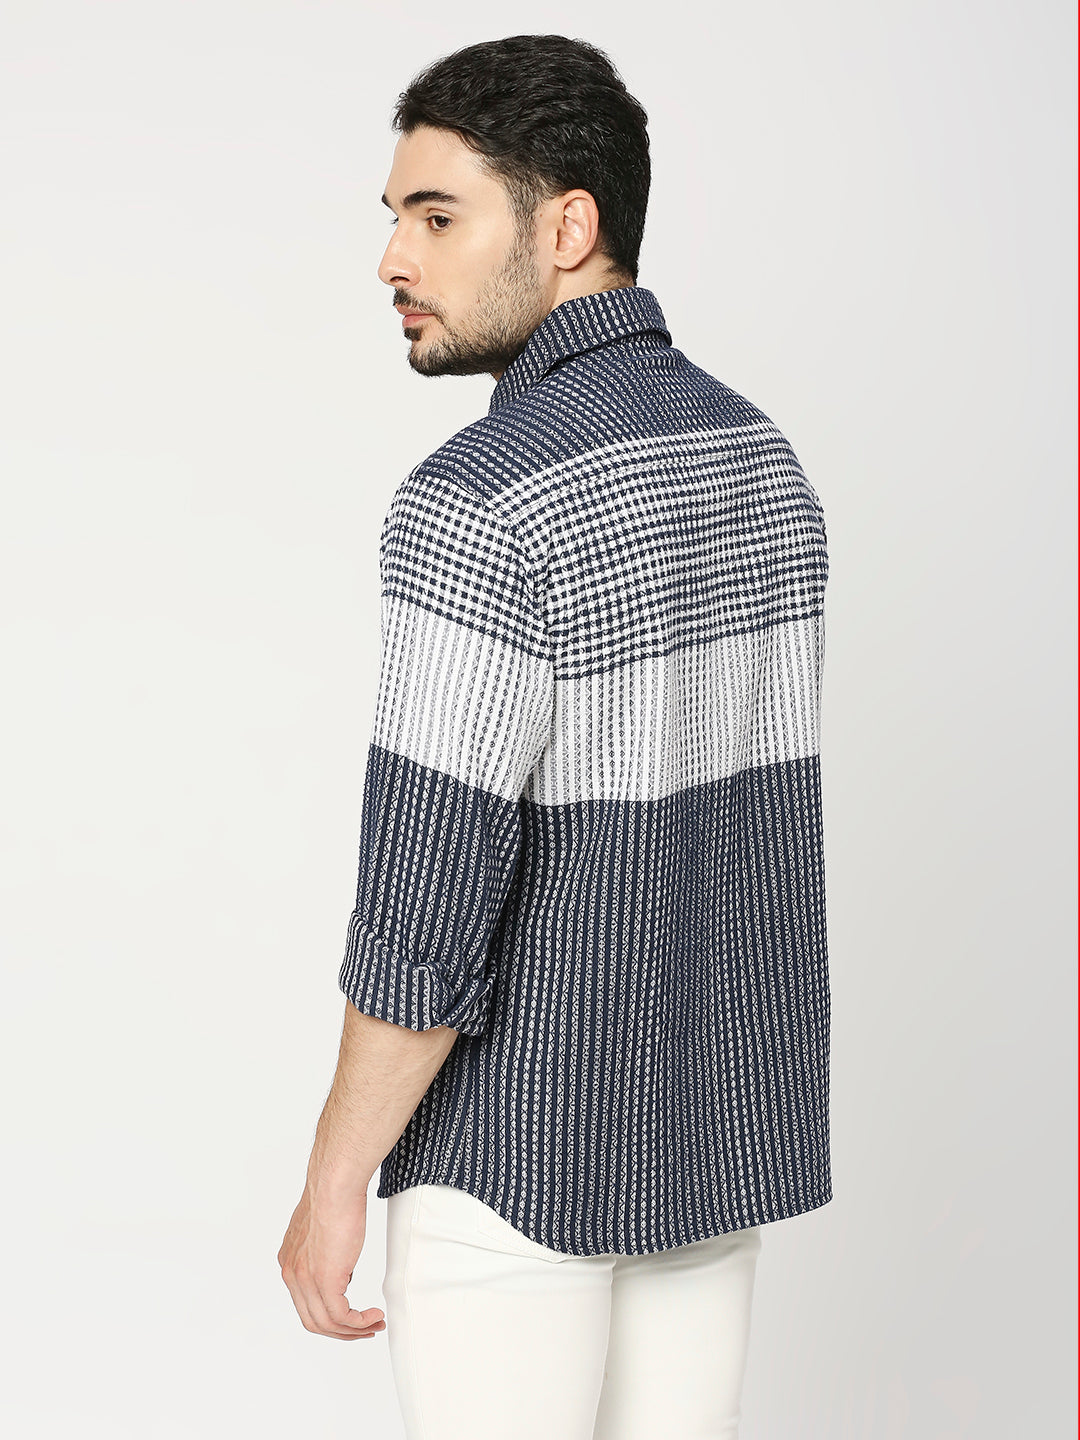 Buy BLAMBLACK Men's Multi-coloured Checks Regular Fit Full Sleeves Spread Collar Shirt